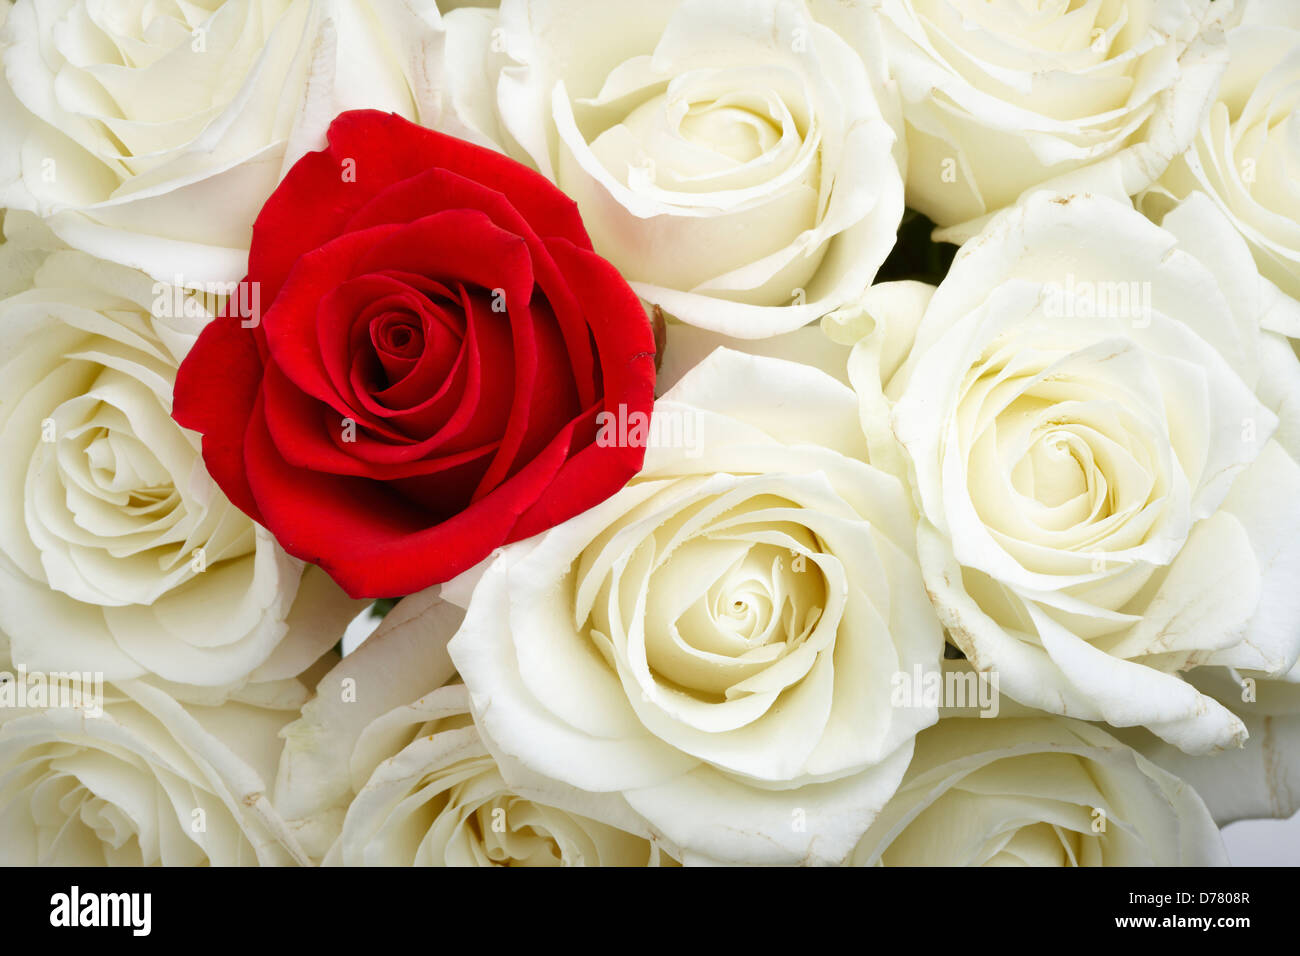 Une rose parmi les roses blanches Photo Stock - Alamy